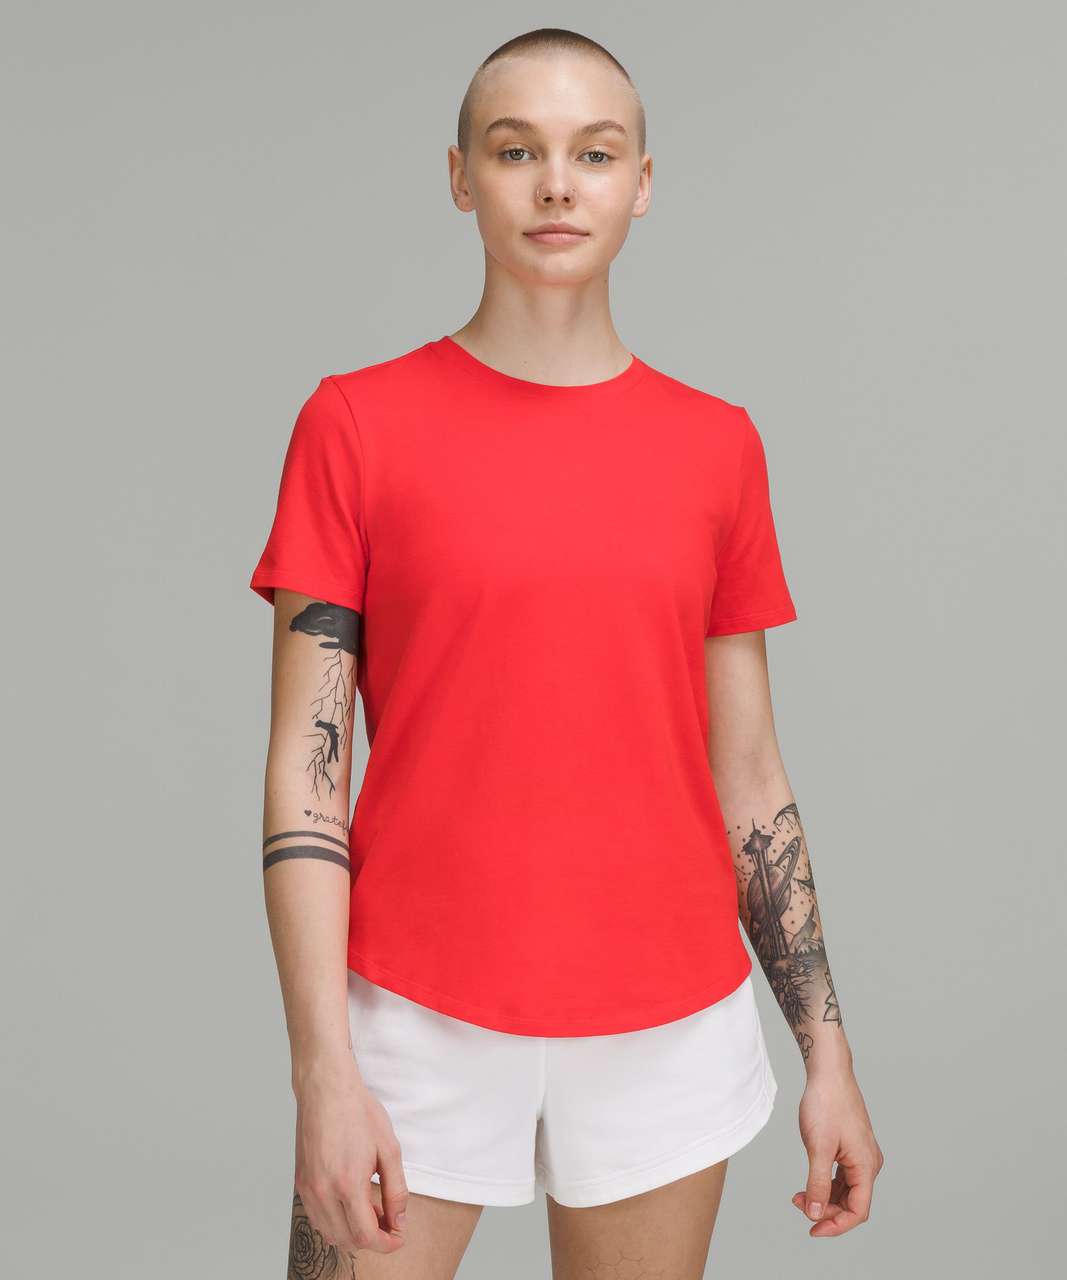 Fanatics Women's T-Shirt - Red - L